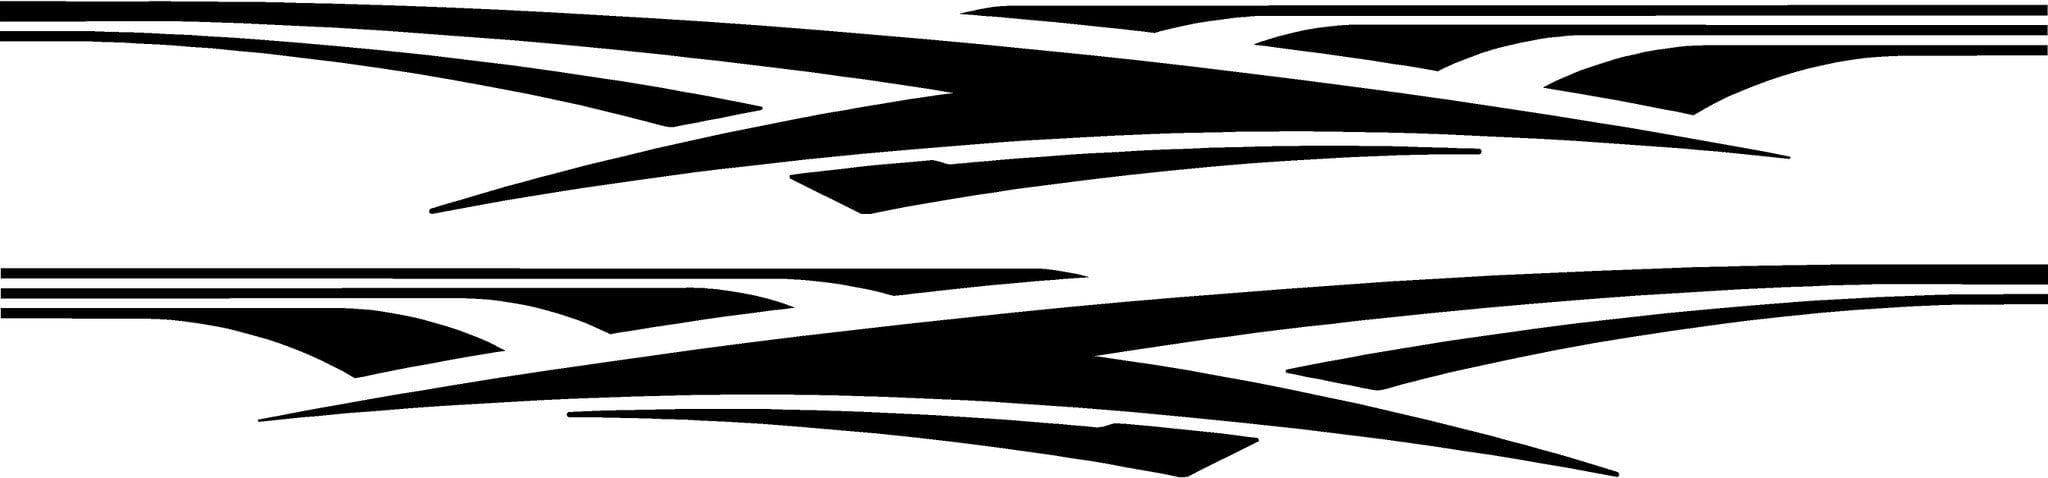 tribal stripes auto decals, truck tribal stripes | Xtreme Digital GraphiX